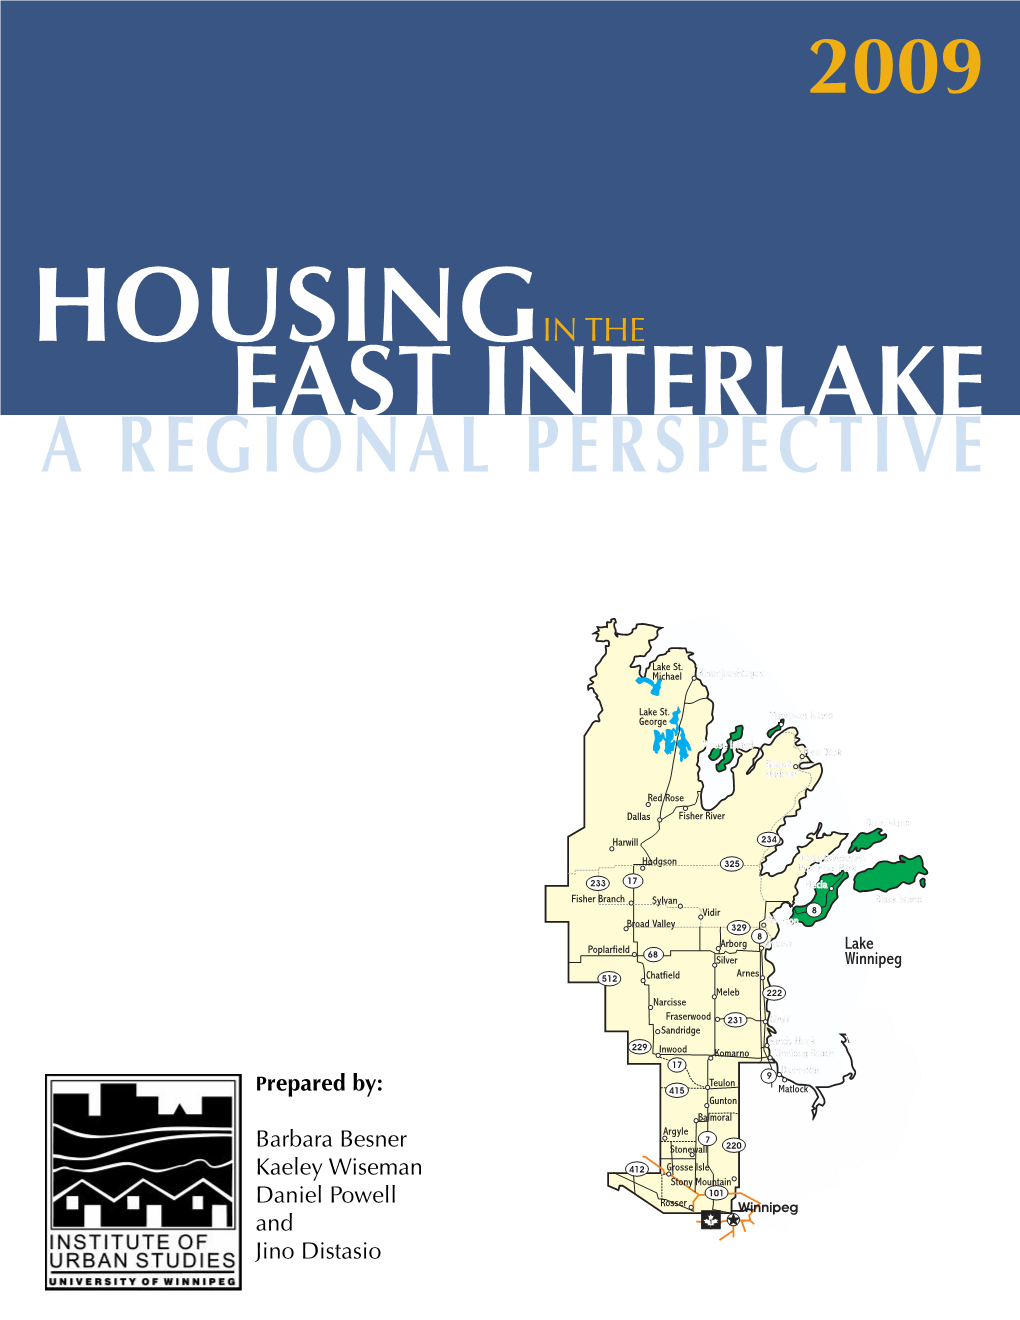 2009 East Interlake a Regional Perspective Final Report.Pdf (2.679Mb)